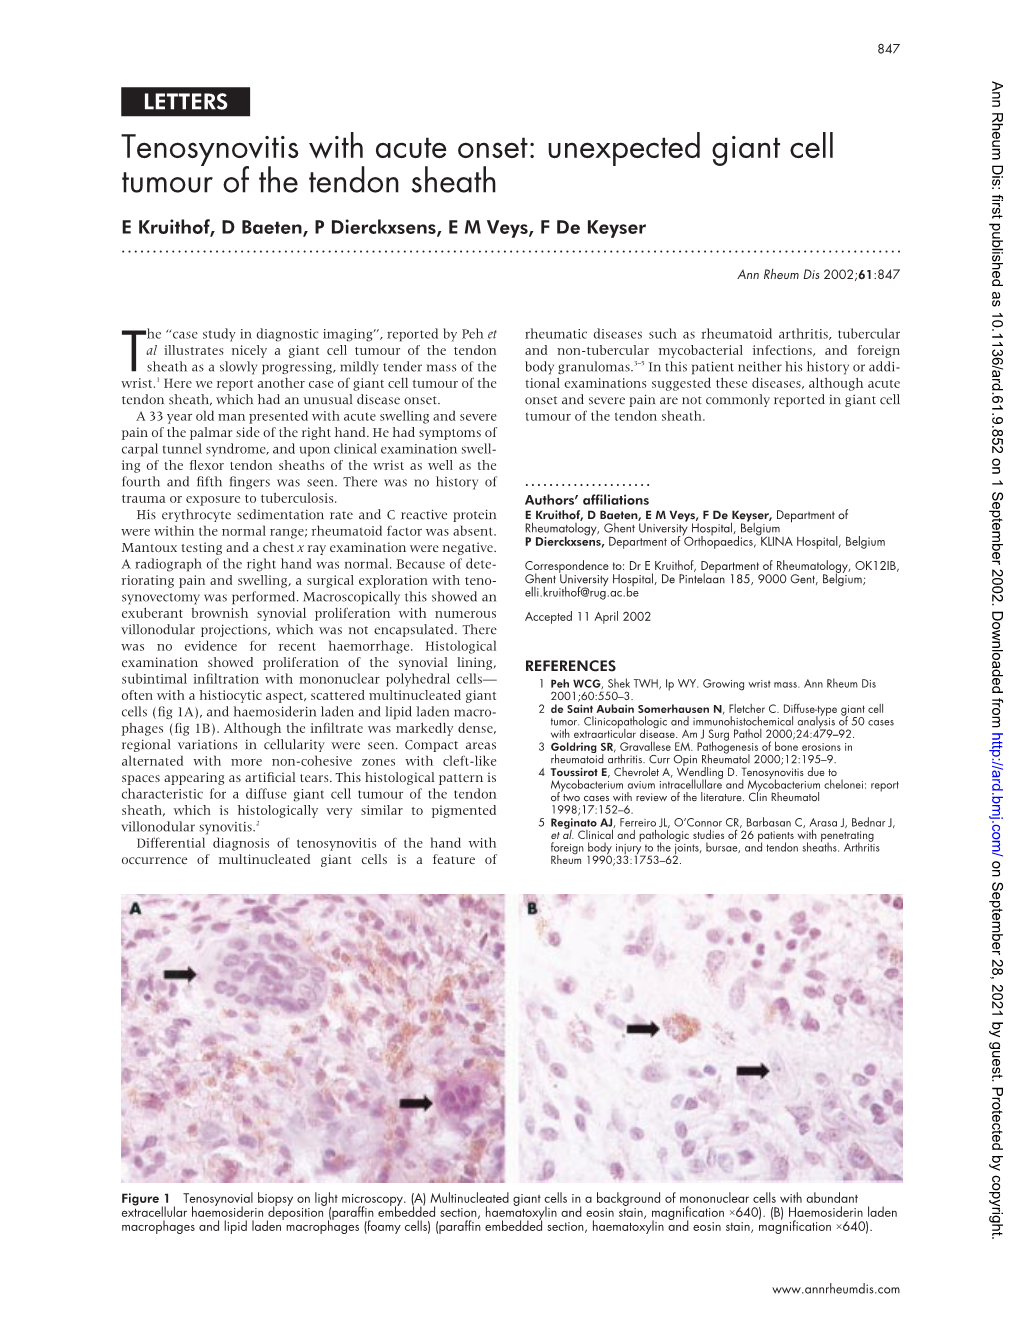 Unexpected Giant Cell Tumour of the Tendon Sheath E Kruithof, D Baeten, P Dierckxsens, E M Veys, F De Keyser